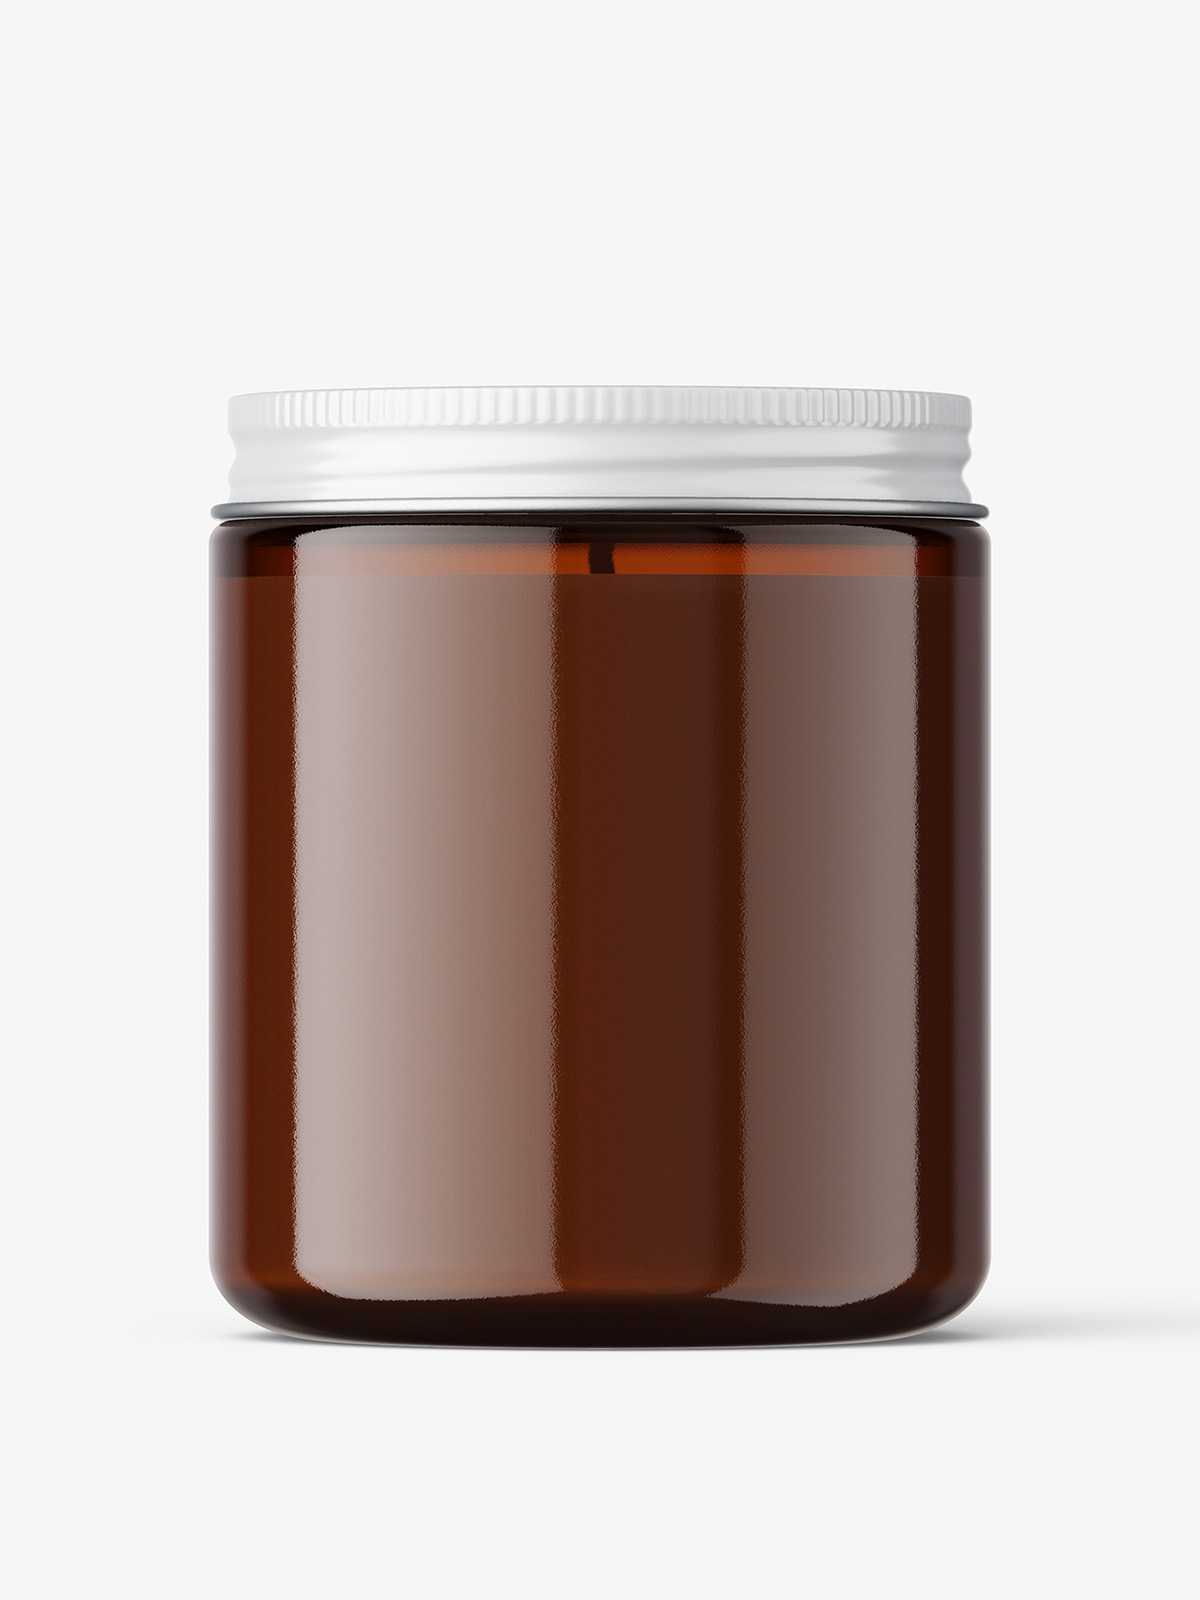 Download Candle in glass jar mockup / amber - Smarty Mockups